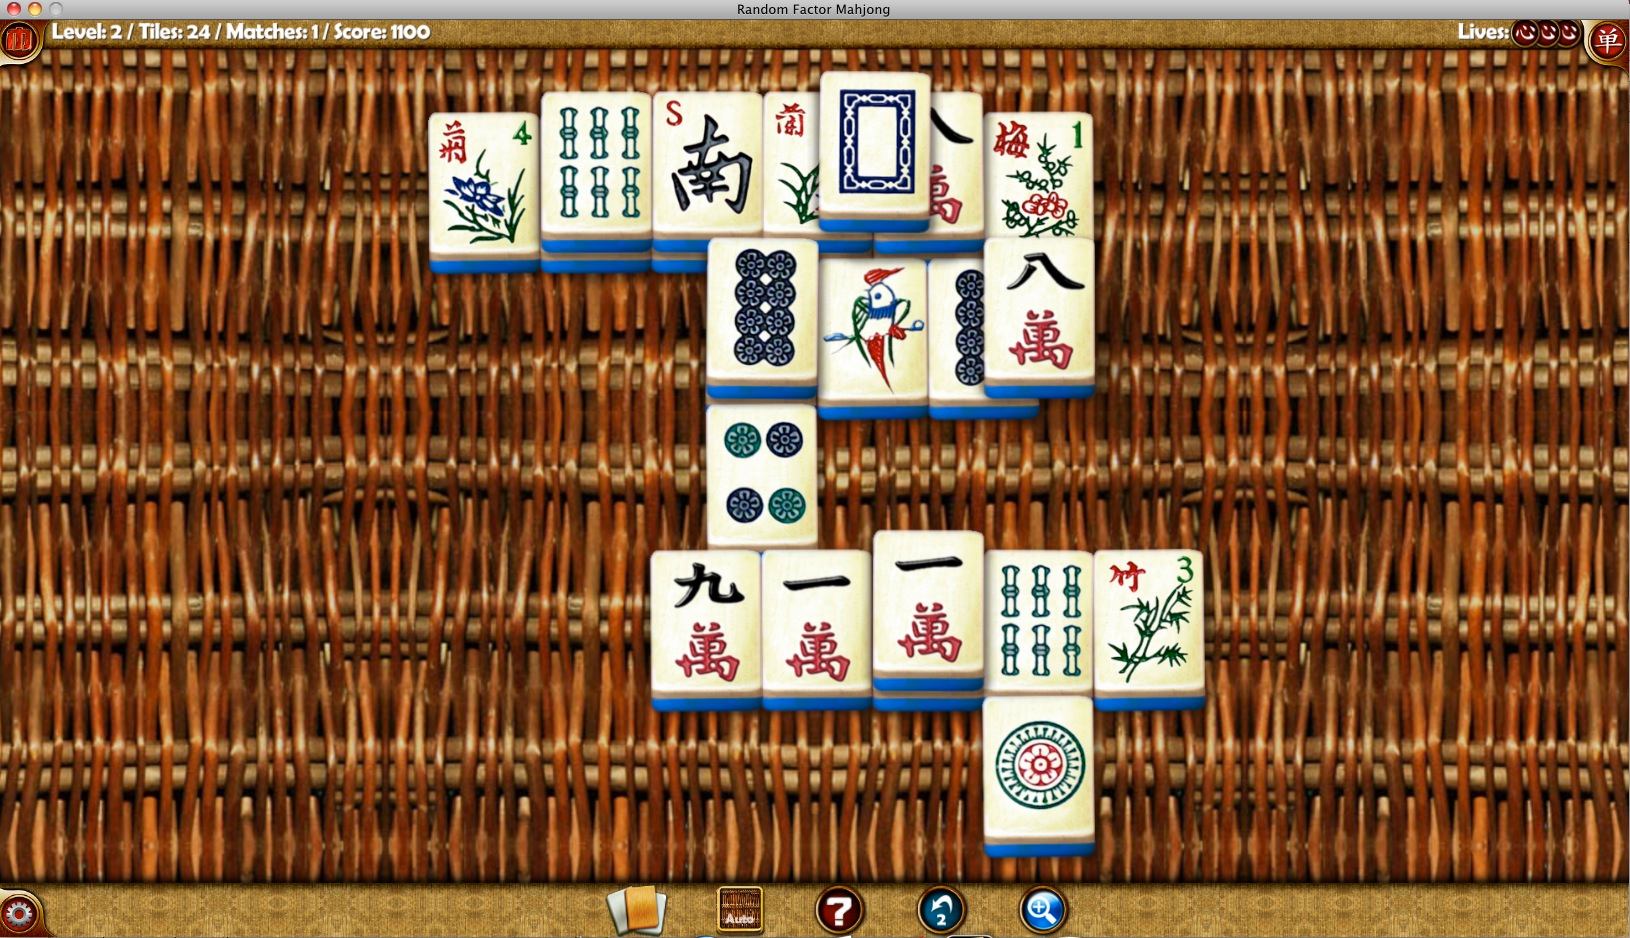 Random Mahjong 2.0 : General view